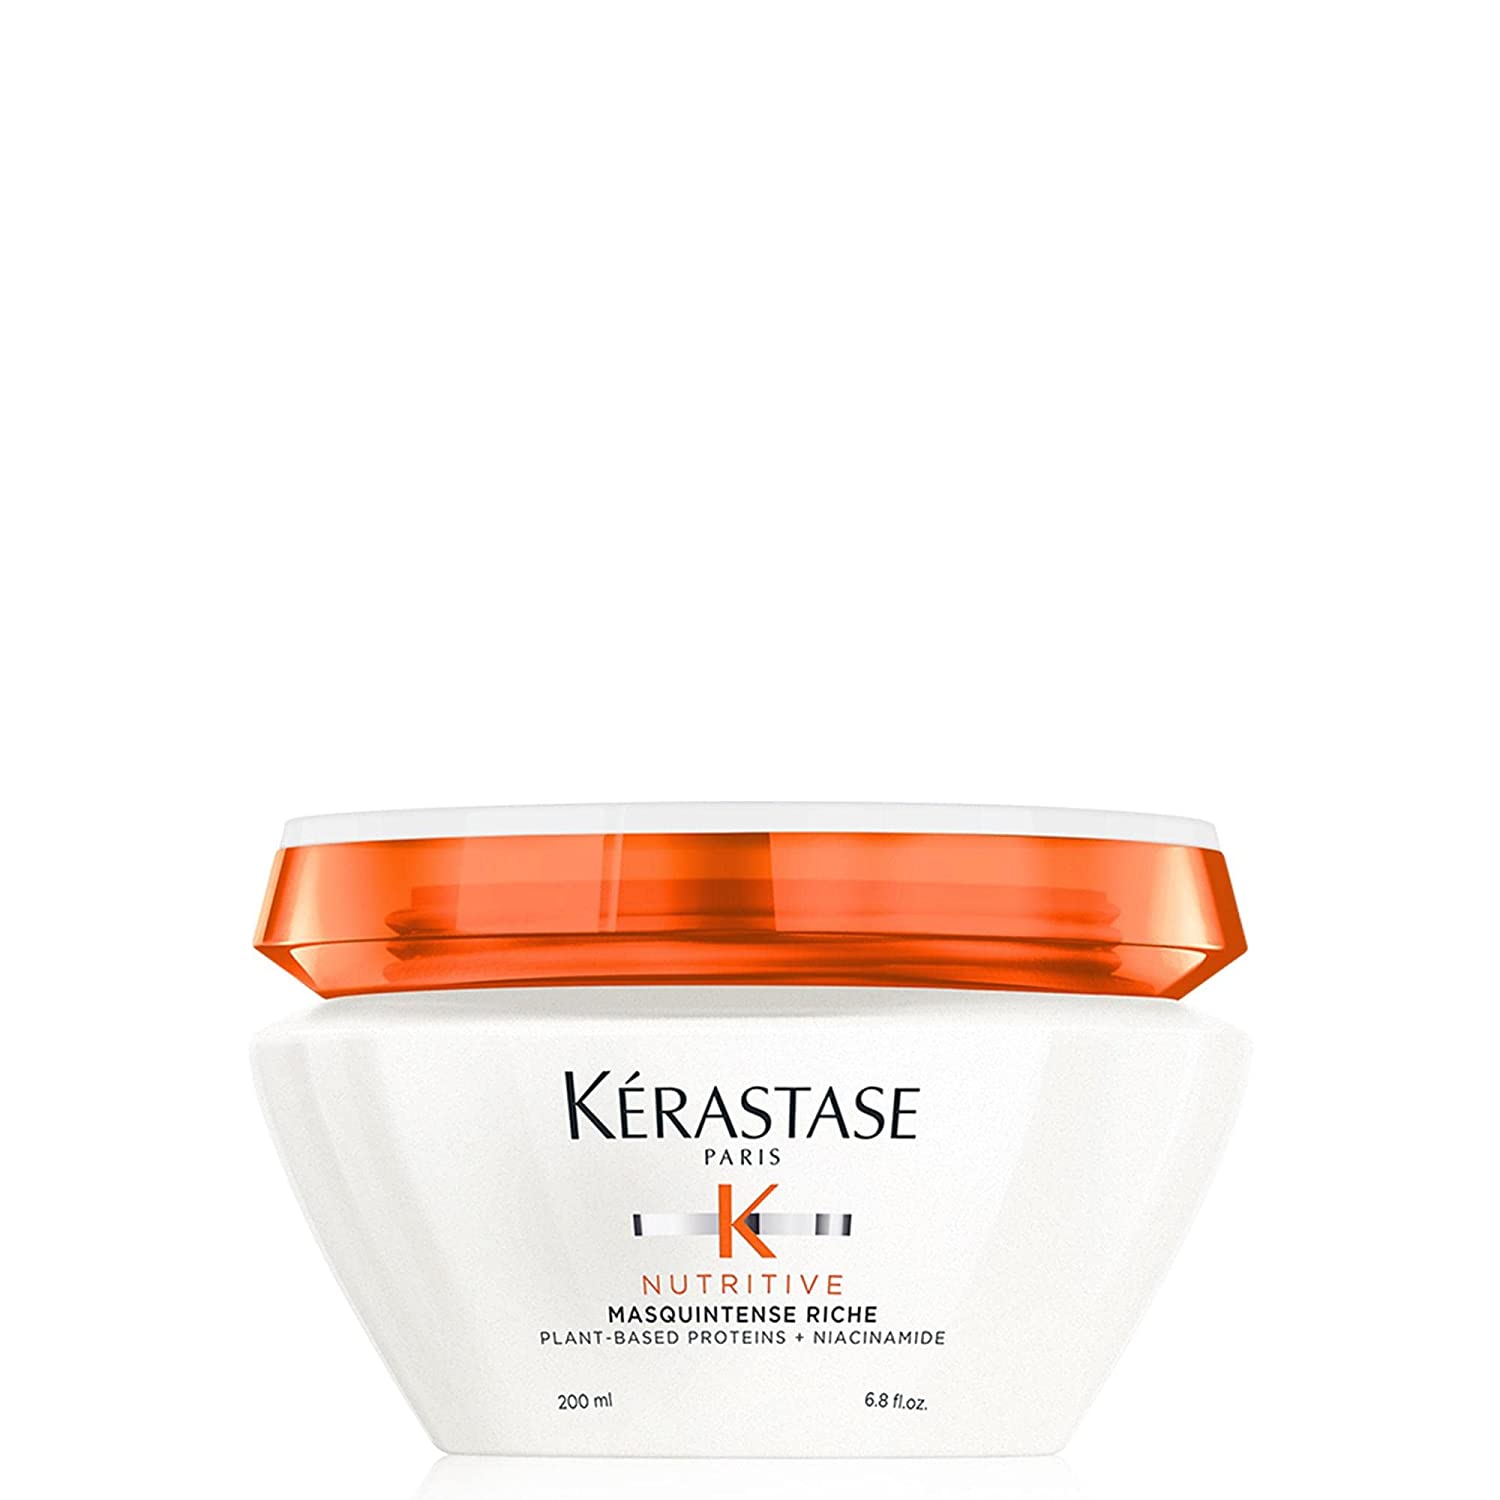 Kérastase Nutritive Hair Treatment for Very Dry, Fine to Medium Hair, Moisturising and Nourishing, No Parabens, Masquintense Riche Deep Nutrition, 200 ml